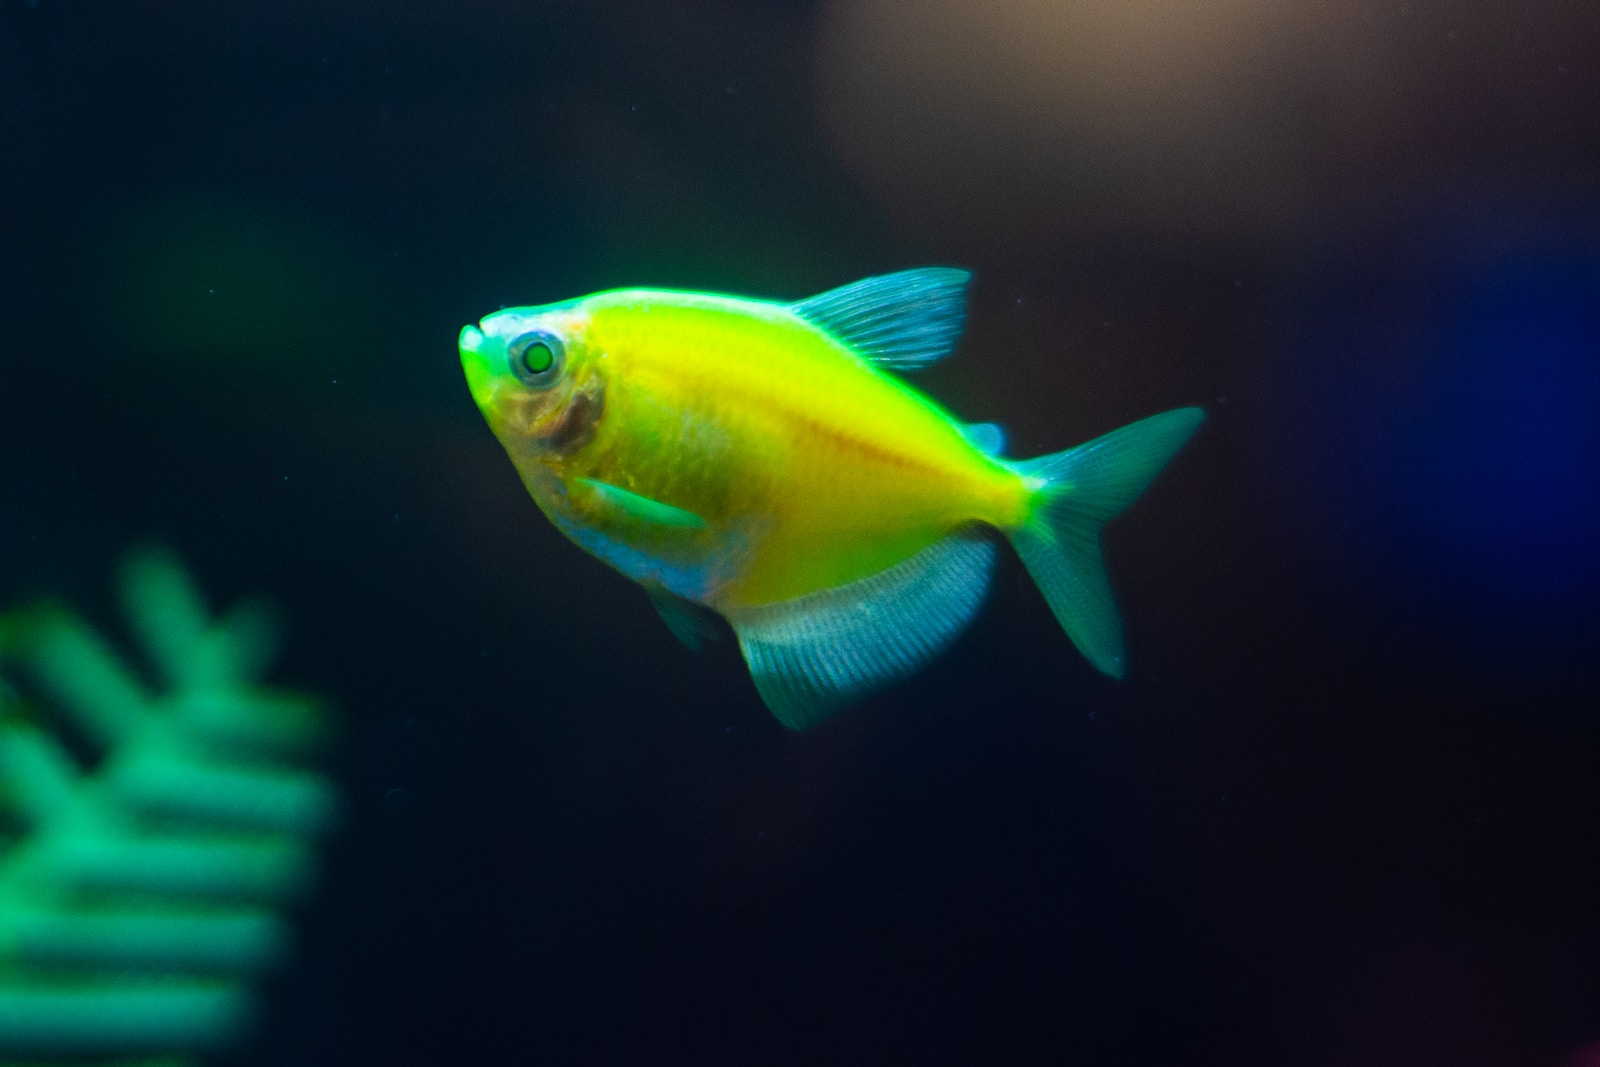 a yellow fish swimming in an aquarium